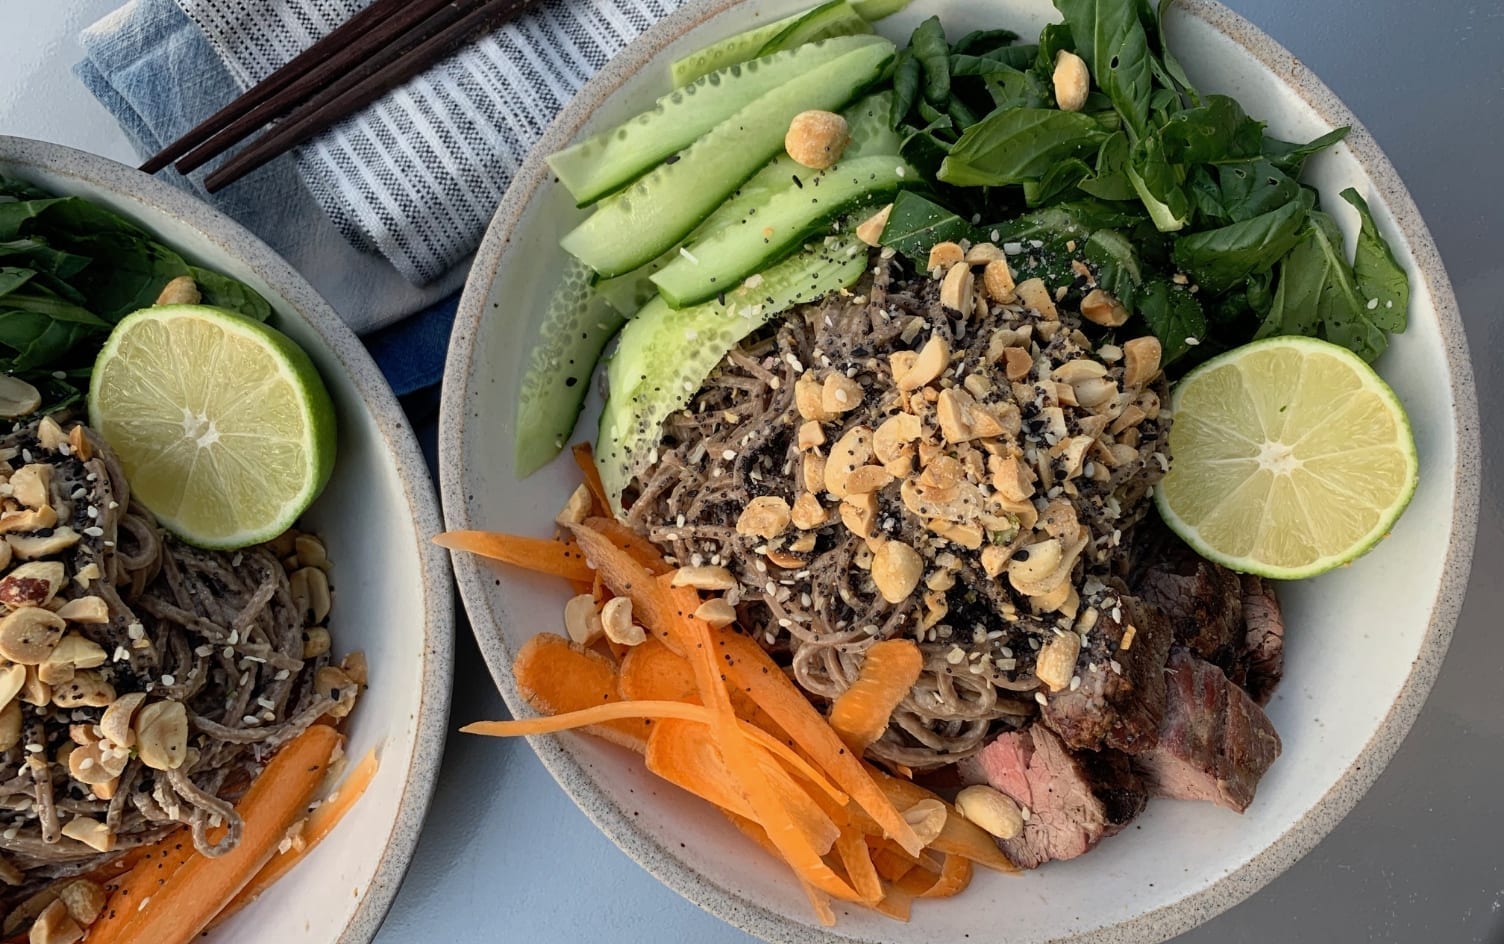 https://blog.myfitnesspal.com/wp-content/uploads/2019/09/10-Meal-Prep-Secrets-to-Great-Grain-Bowls-For-Lunch-1.jpg